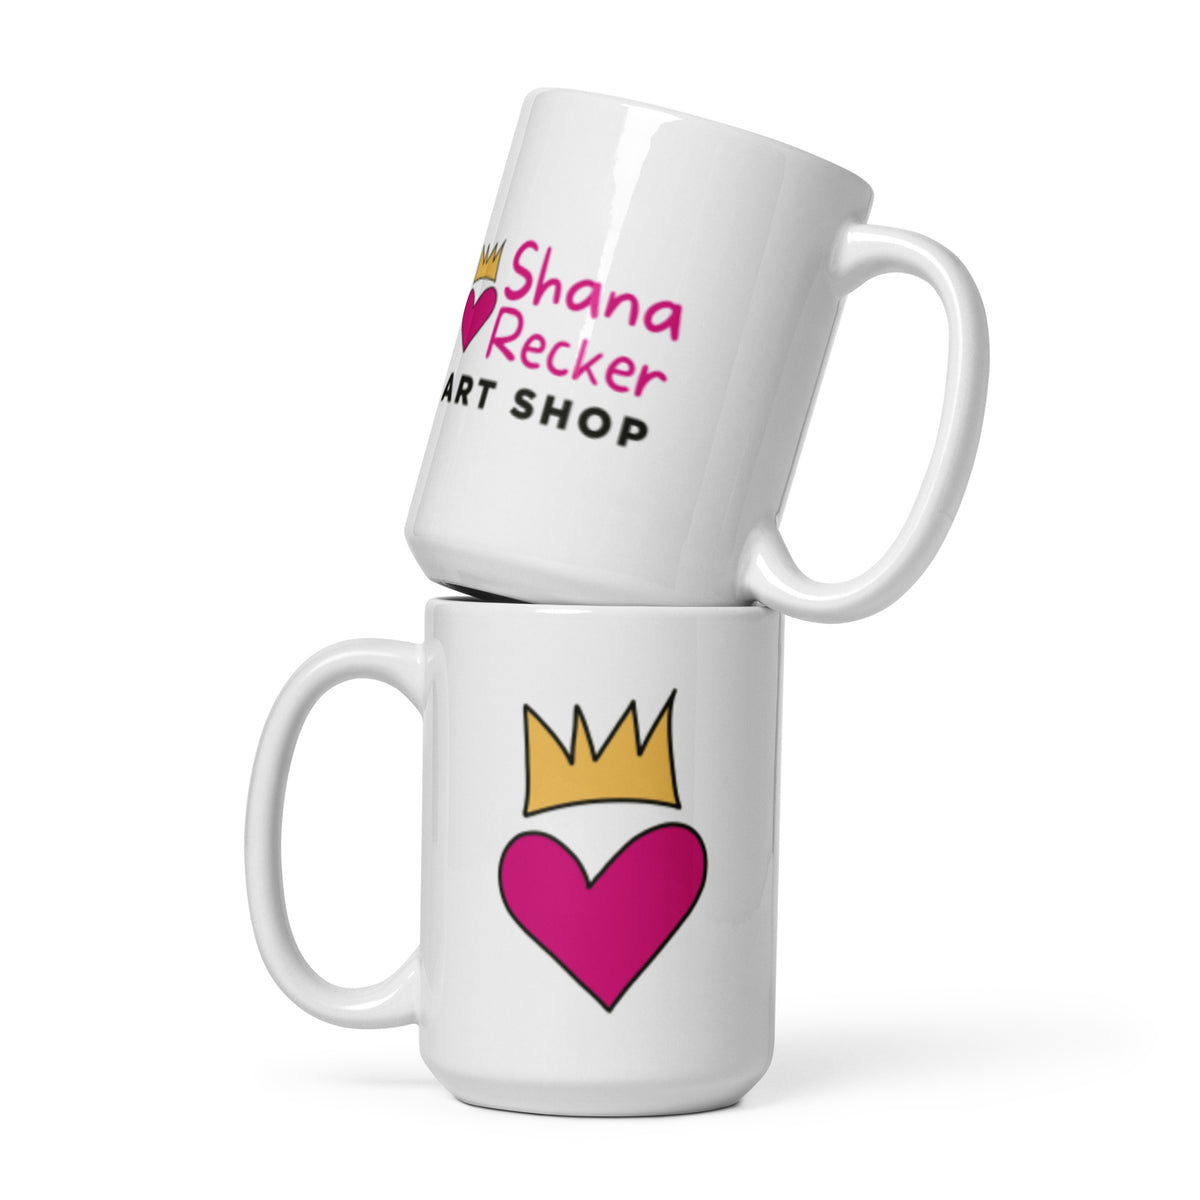 Shana Recker Art Shop White glossy mug